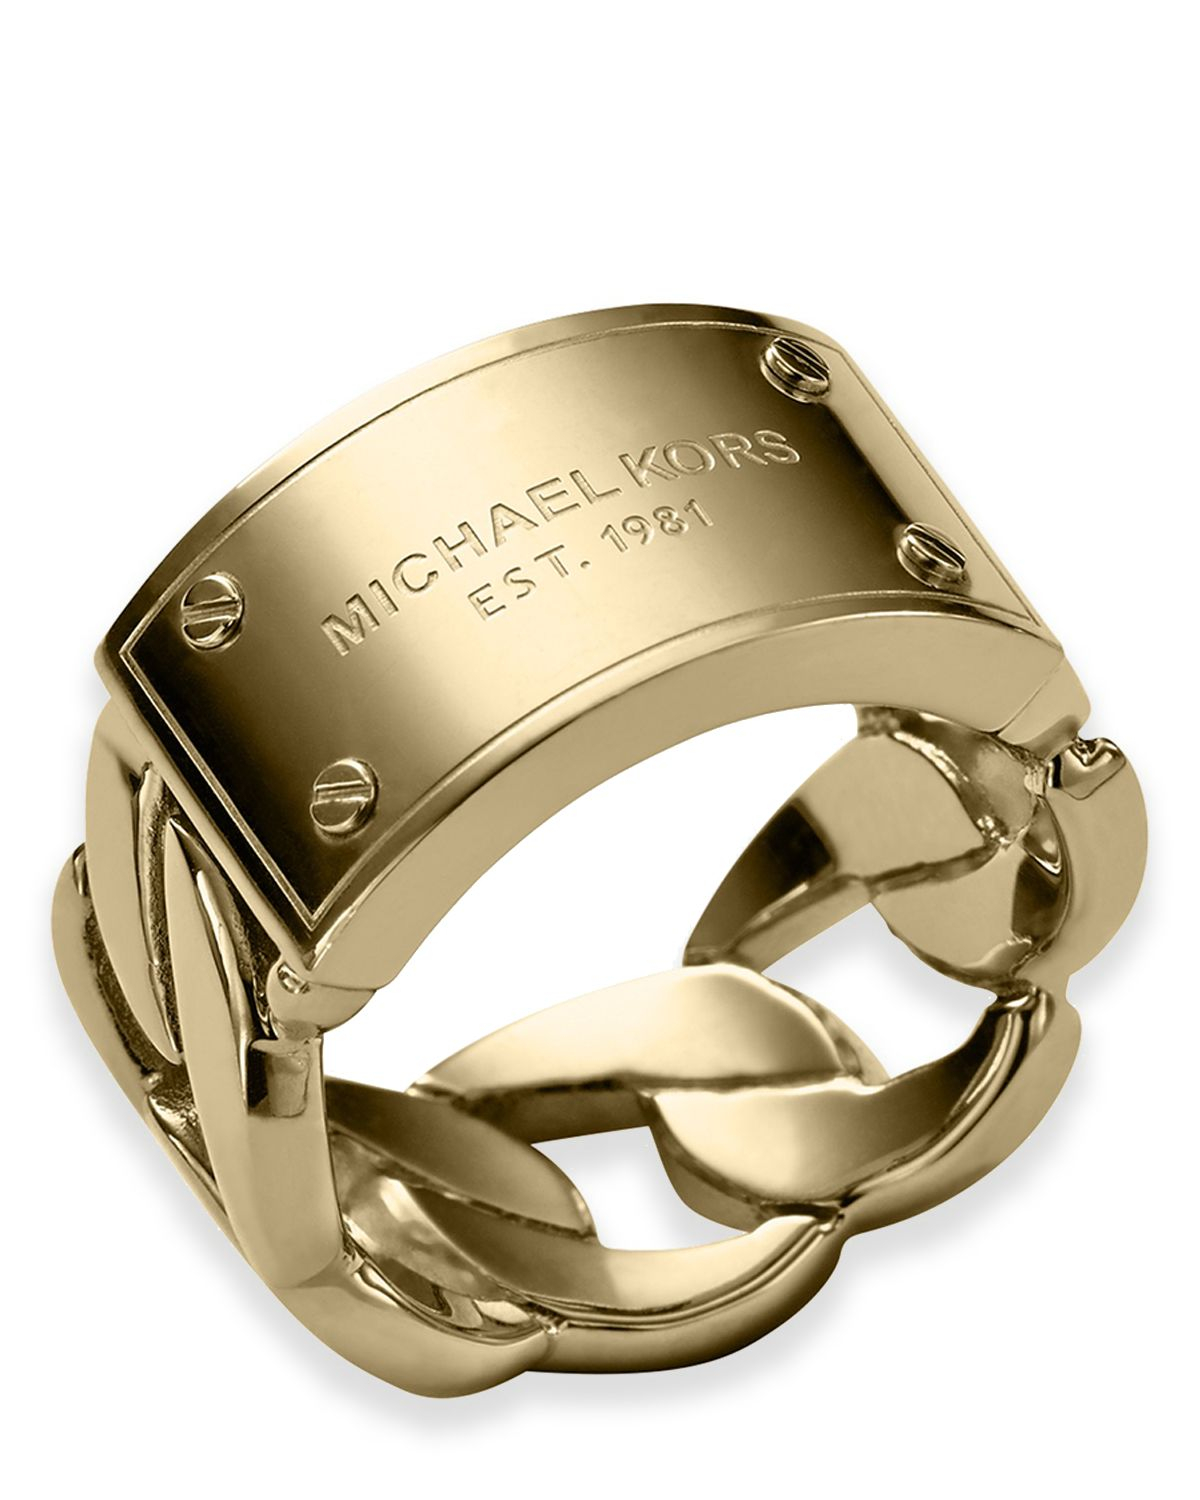 Michael Kors Mens Jewellery Online, 54% OFF | www.bridgepartnersllc.com